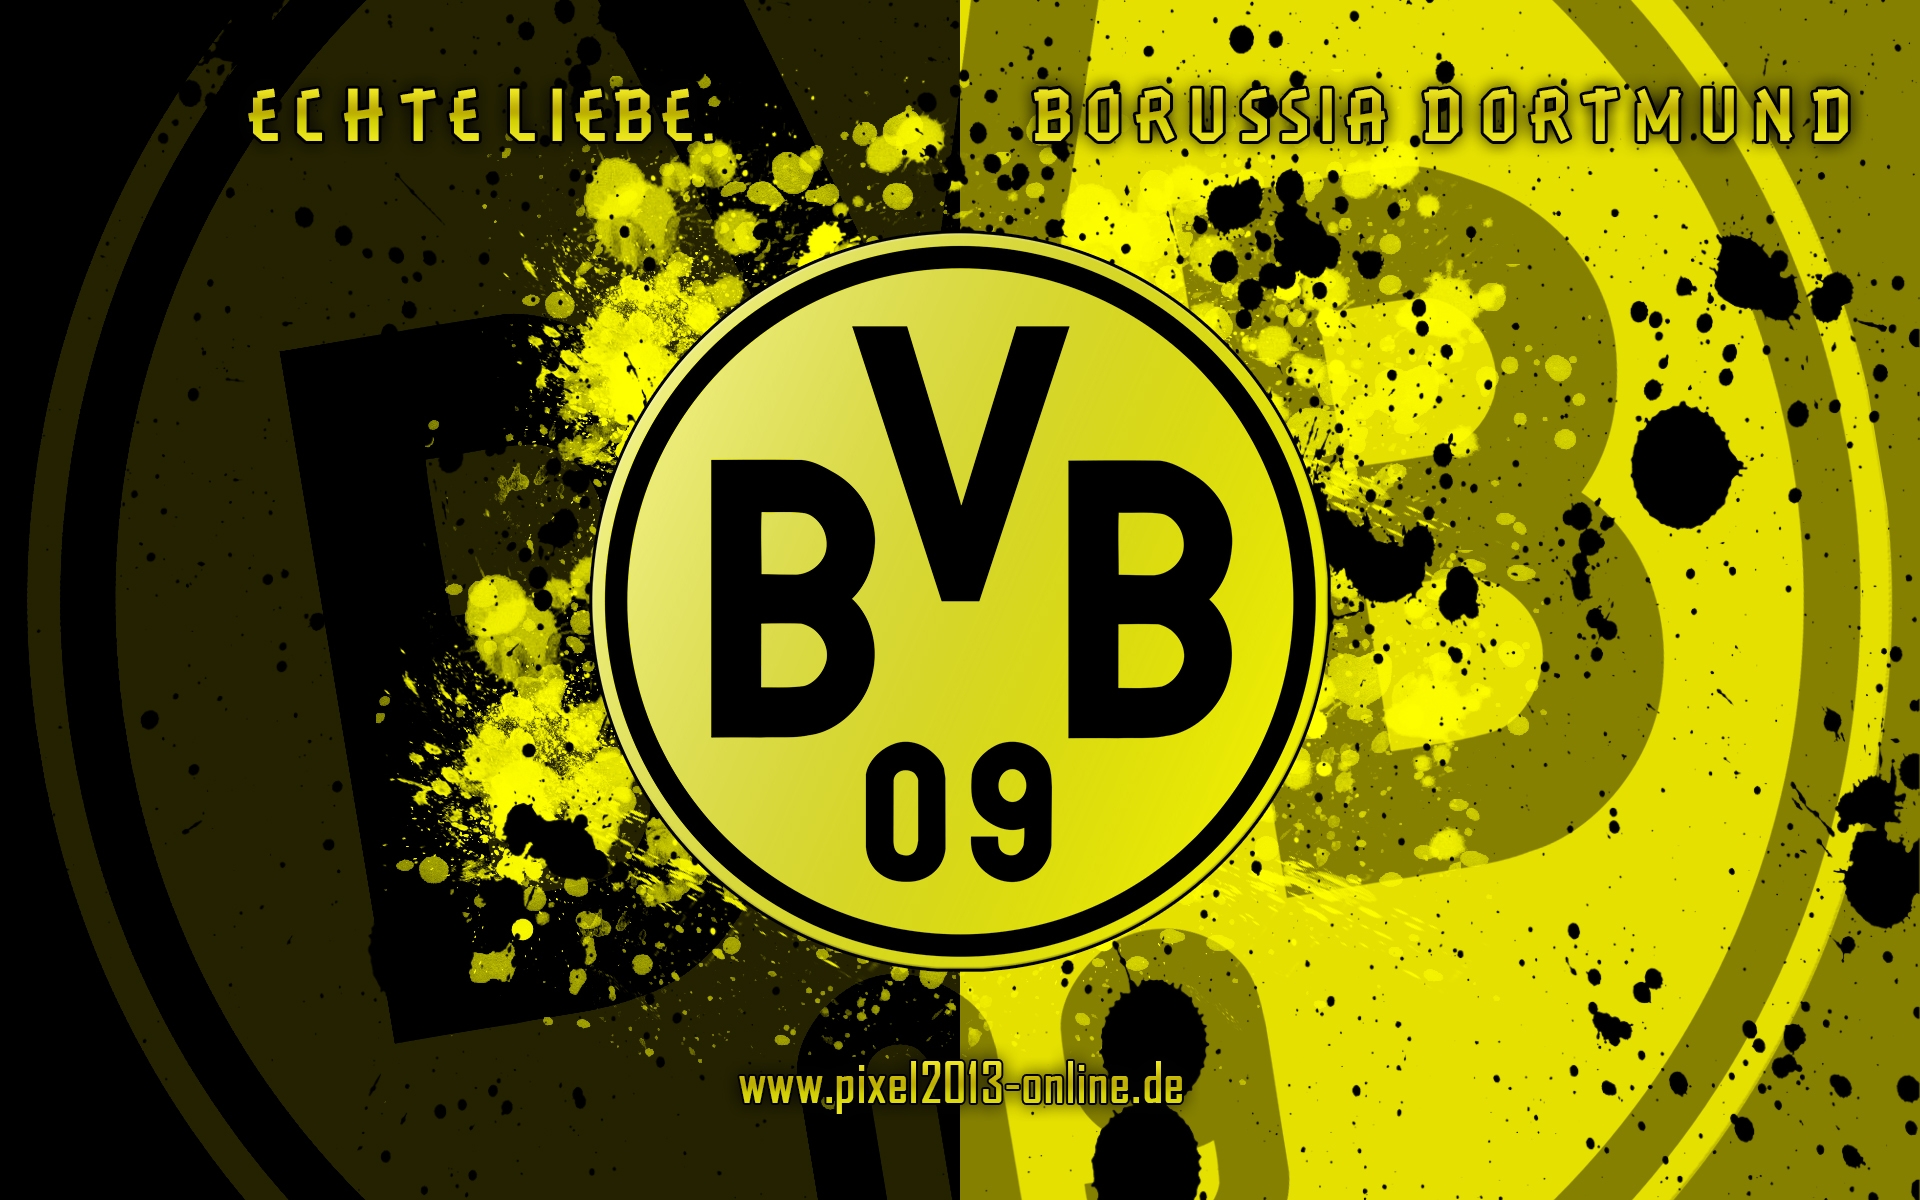 3815_9_Borussia_Dortmund_Wallpaper_2014.jpg